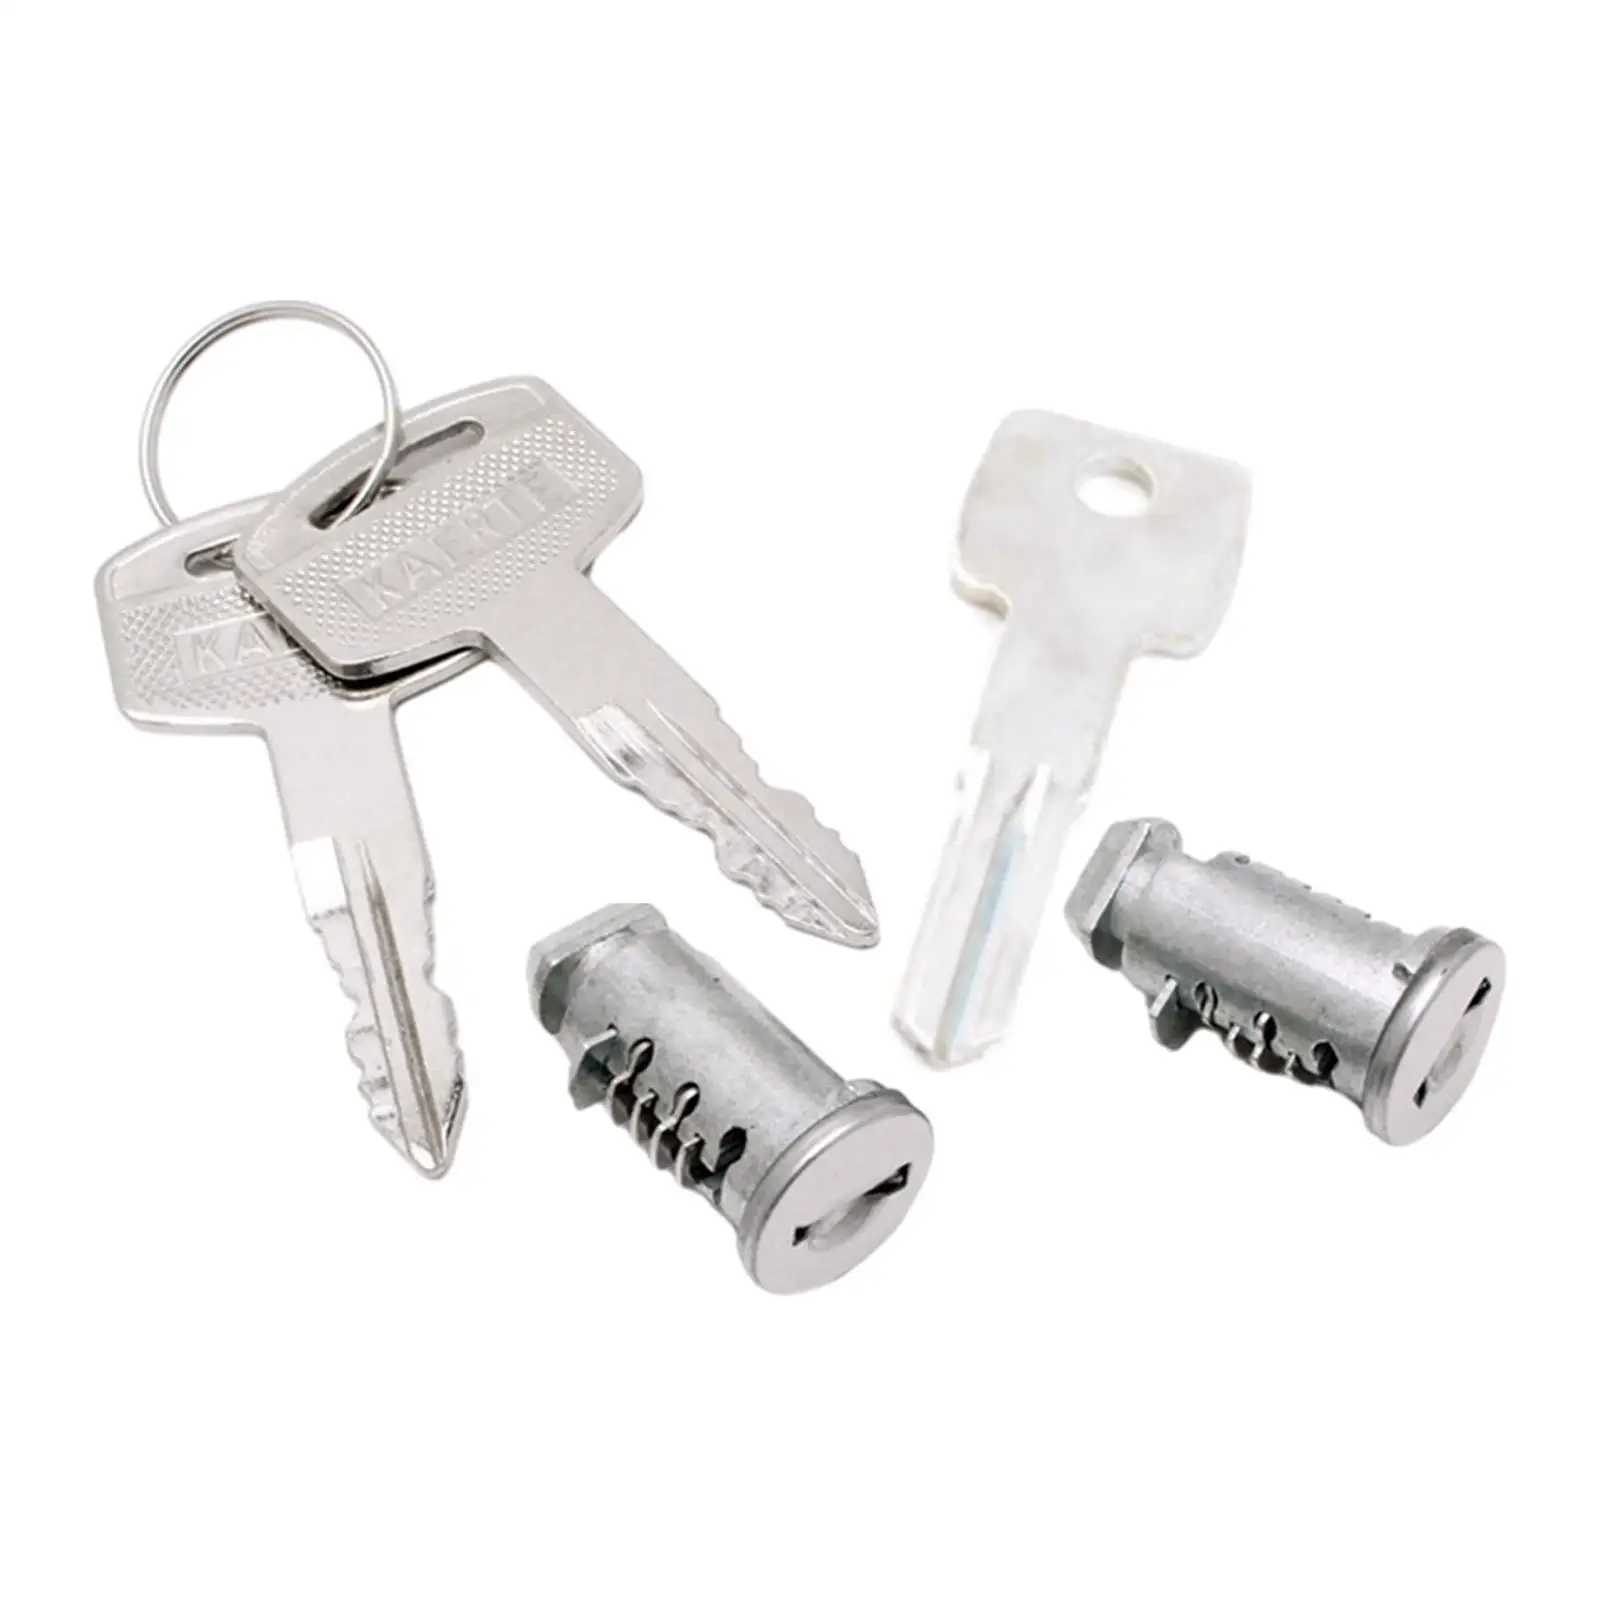 2 Pieces Lock Cylinders for Car Racks System Accessory Roof Rack Cross Bars Lock Key Kit for Car Rack Locks